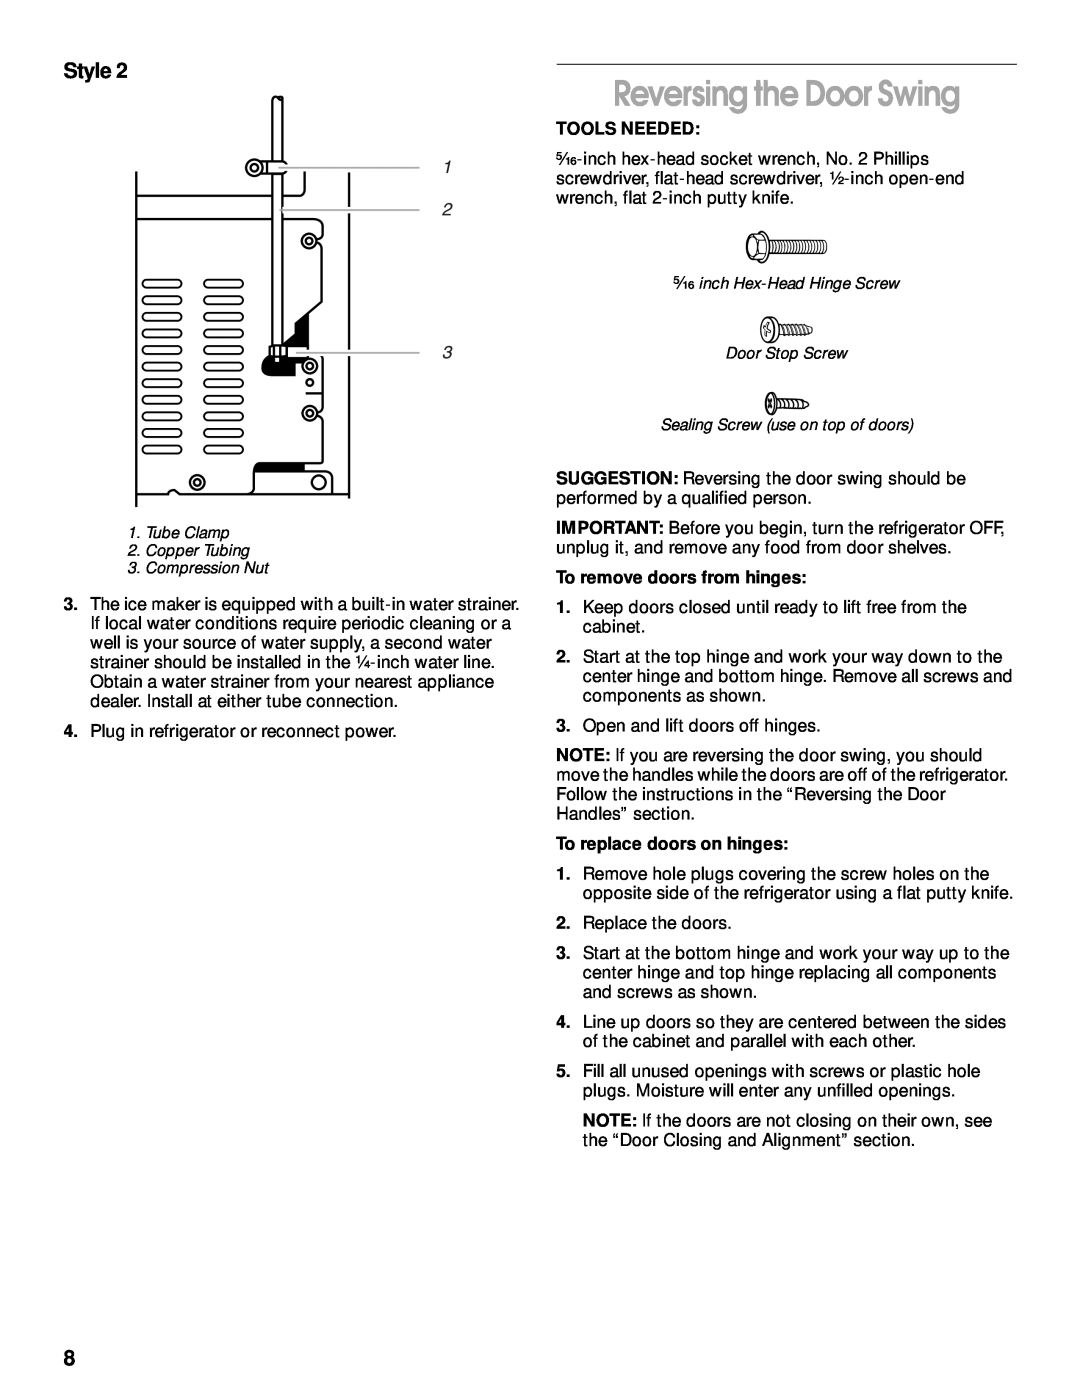 Whirlpool TT14DKXJW00 manual Reversing the Door Swing, Style, Tools Needed, To remove doors from hinges 